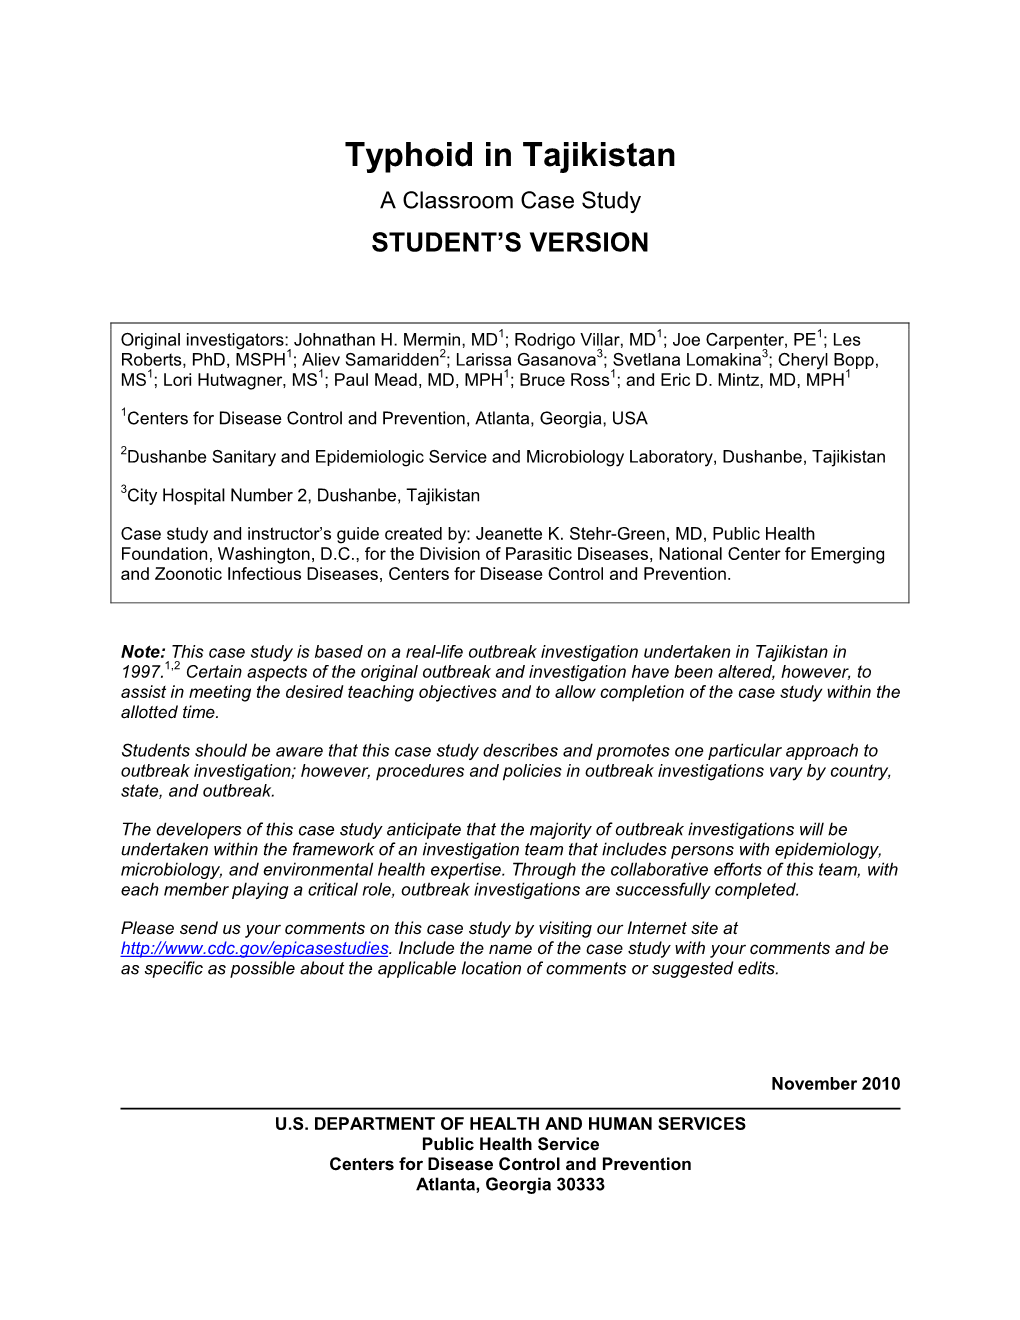 Typhoid in Tajikistan a Classroom Case Study STUDENT’S VERSION